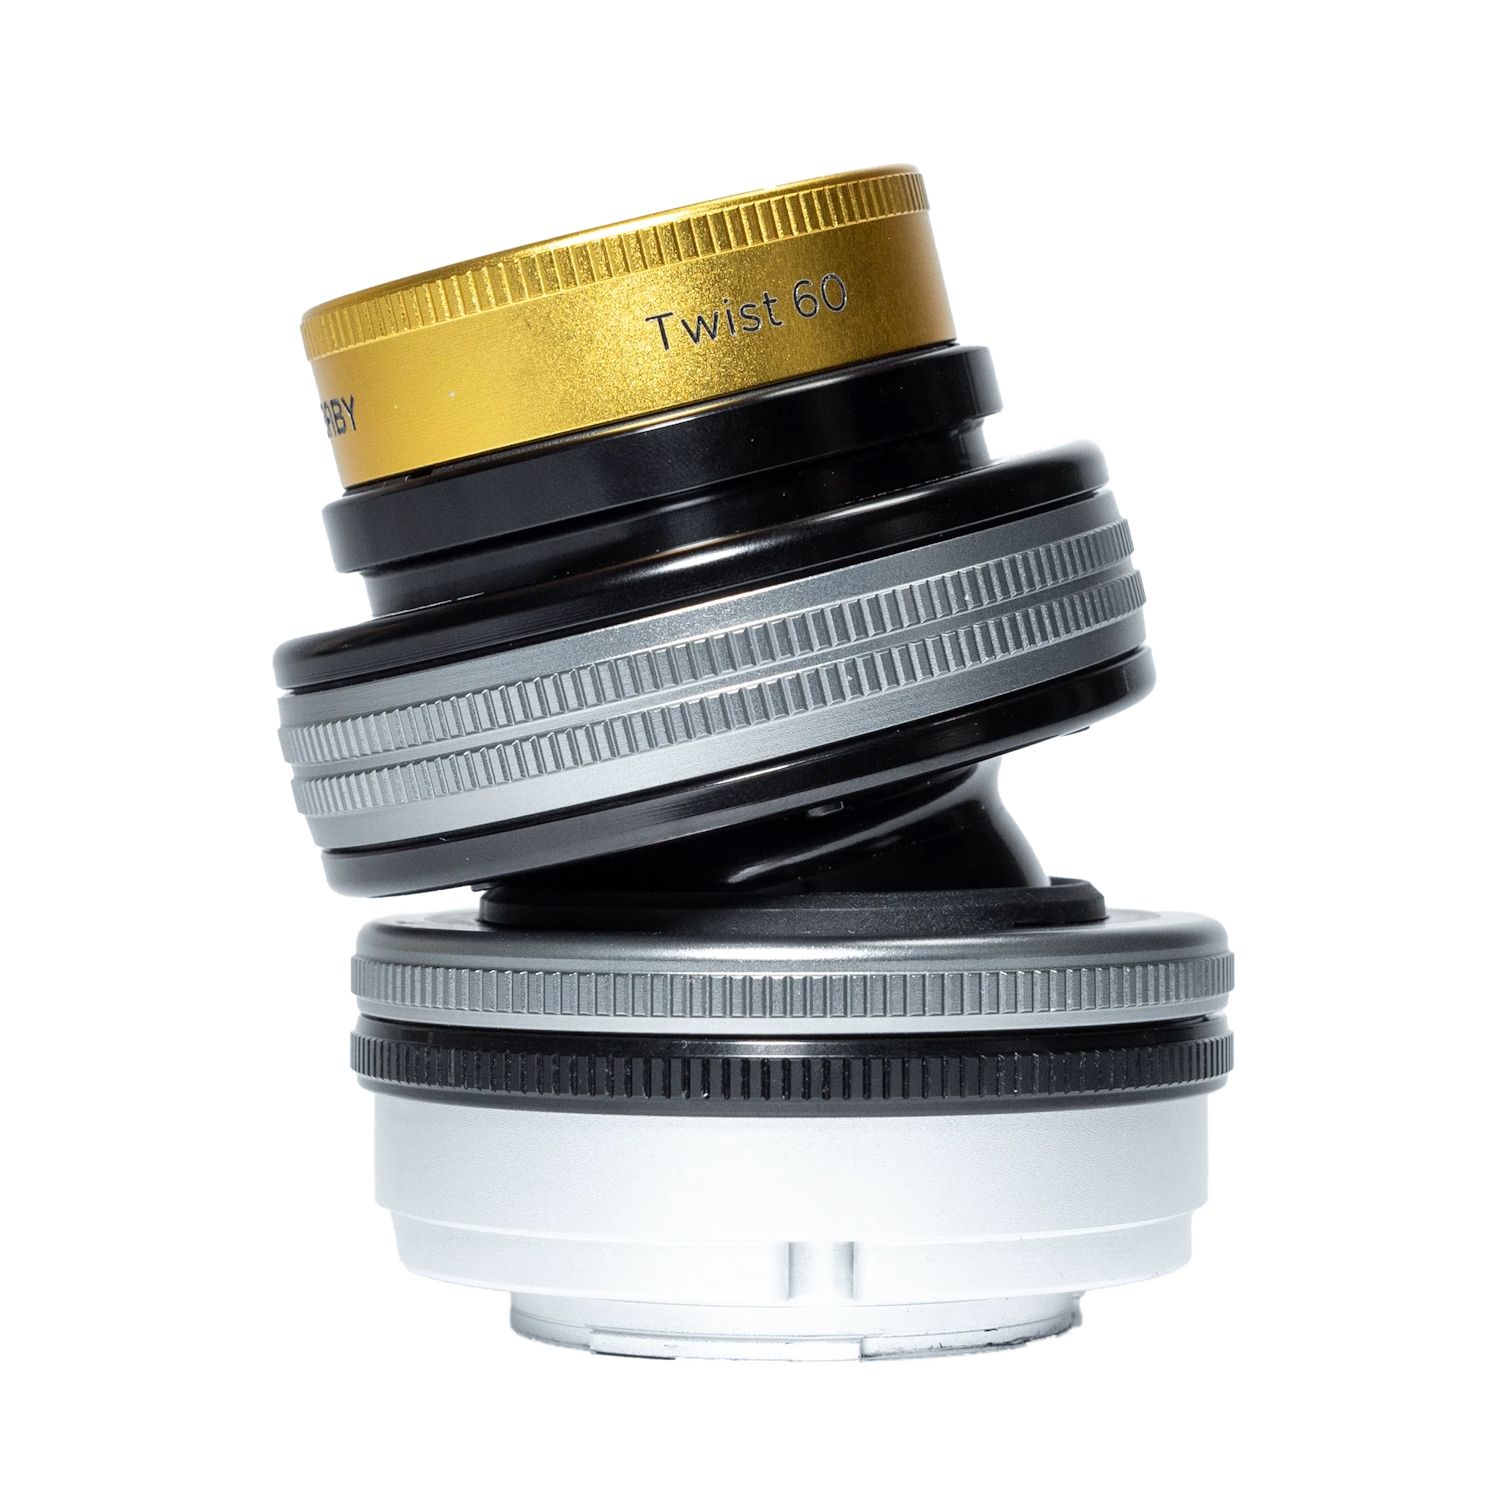 Lensbaby Twist 60 + Double Glass II Optic Swap Kit for Sony E Mount